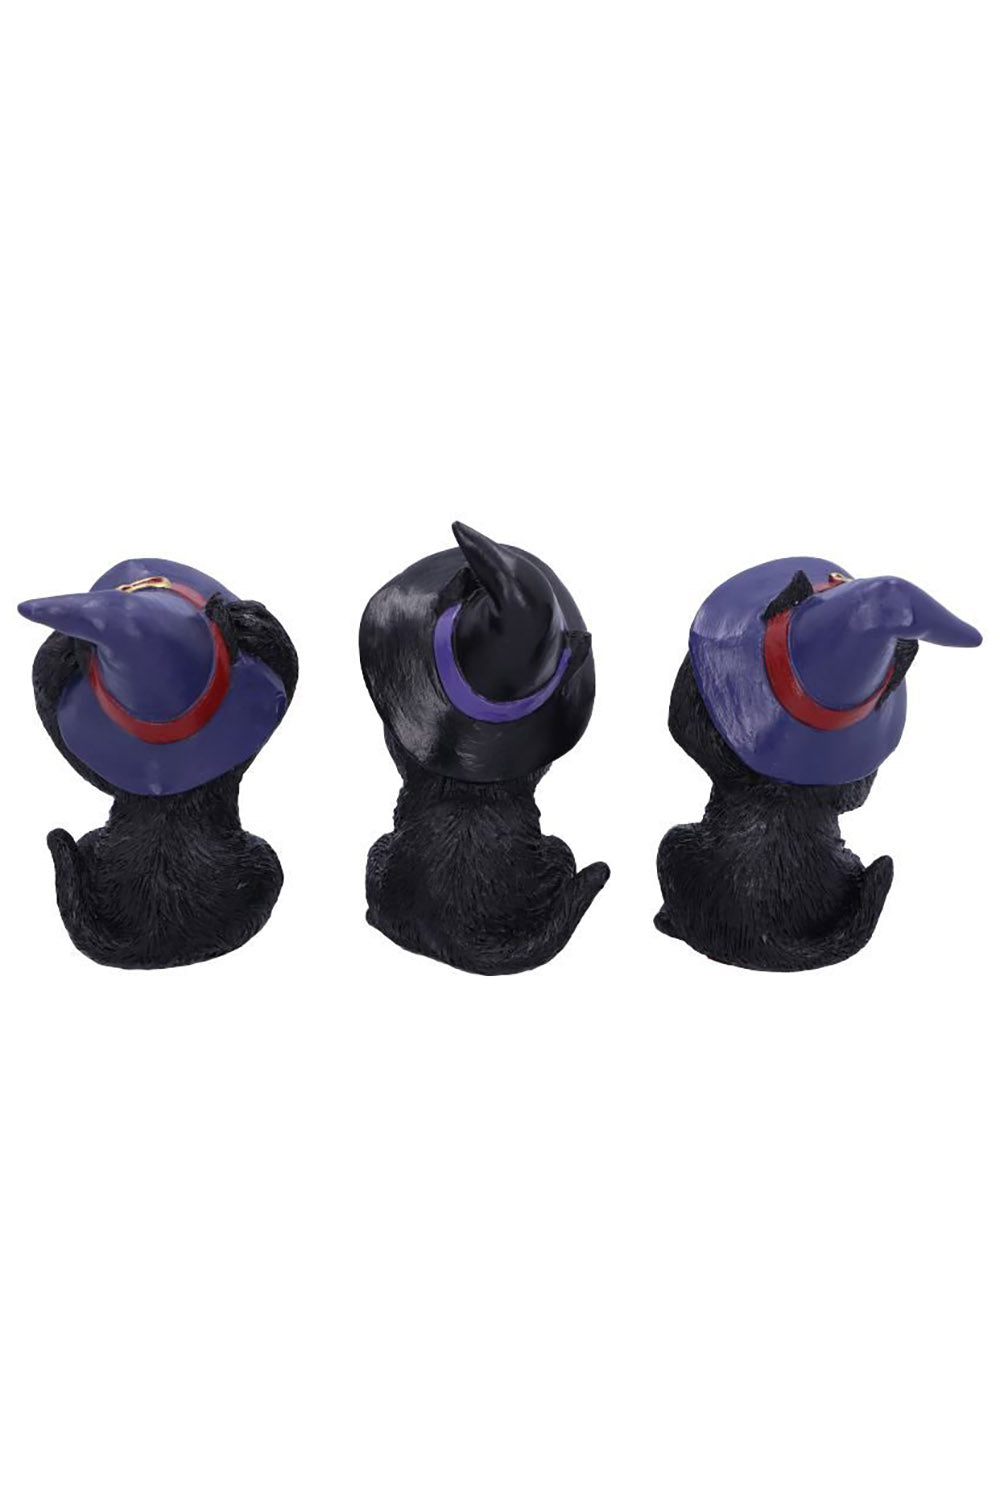 Three Wise Familiars See No Hear No Speak No Evil Black Cats Figurines